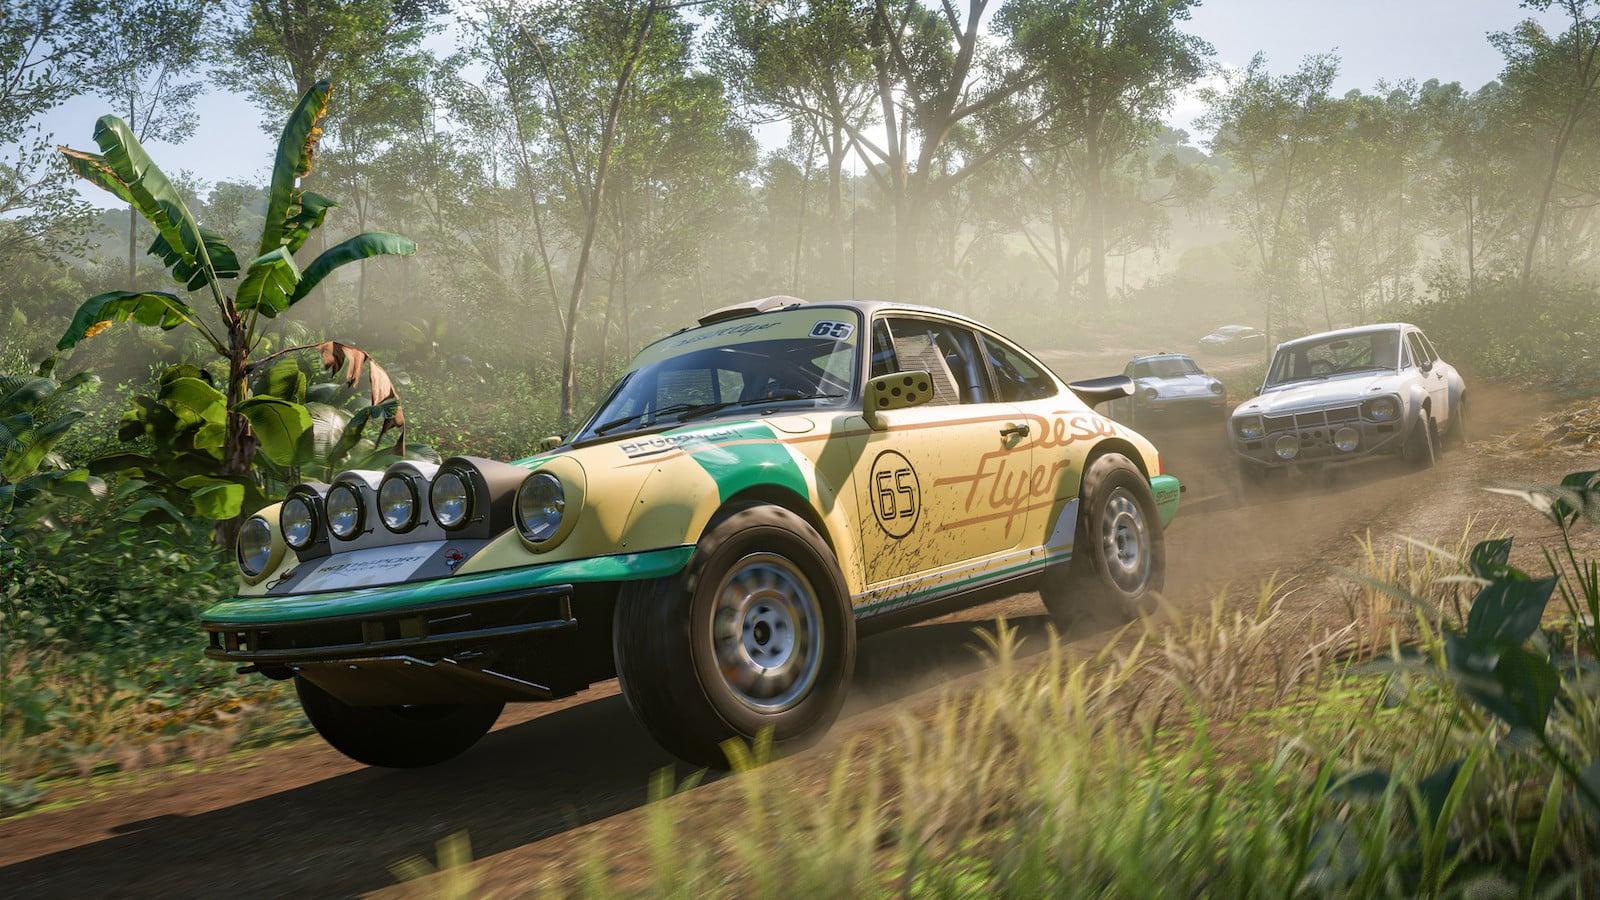 Forza Horizon 5 image showing cars racing through the jungle